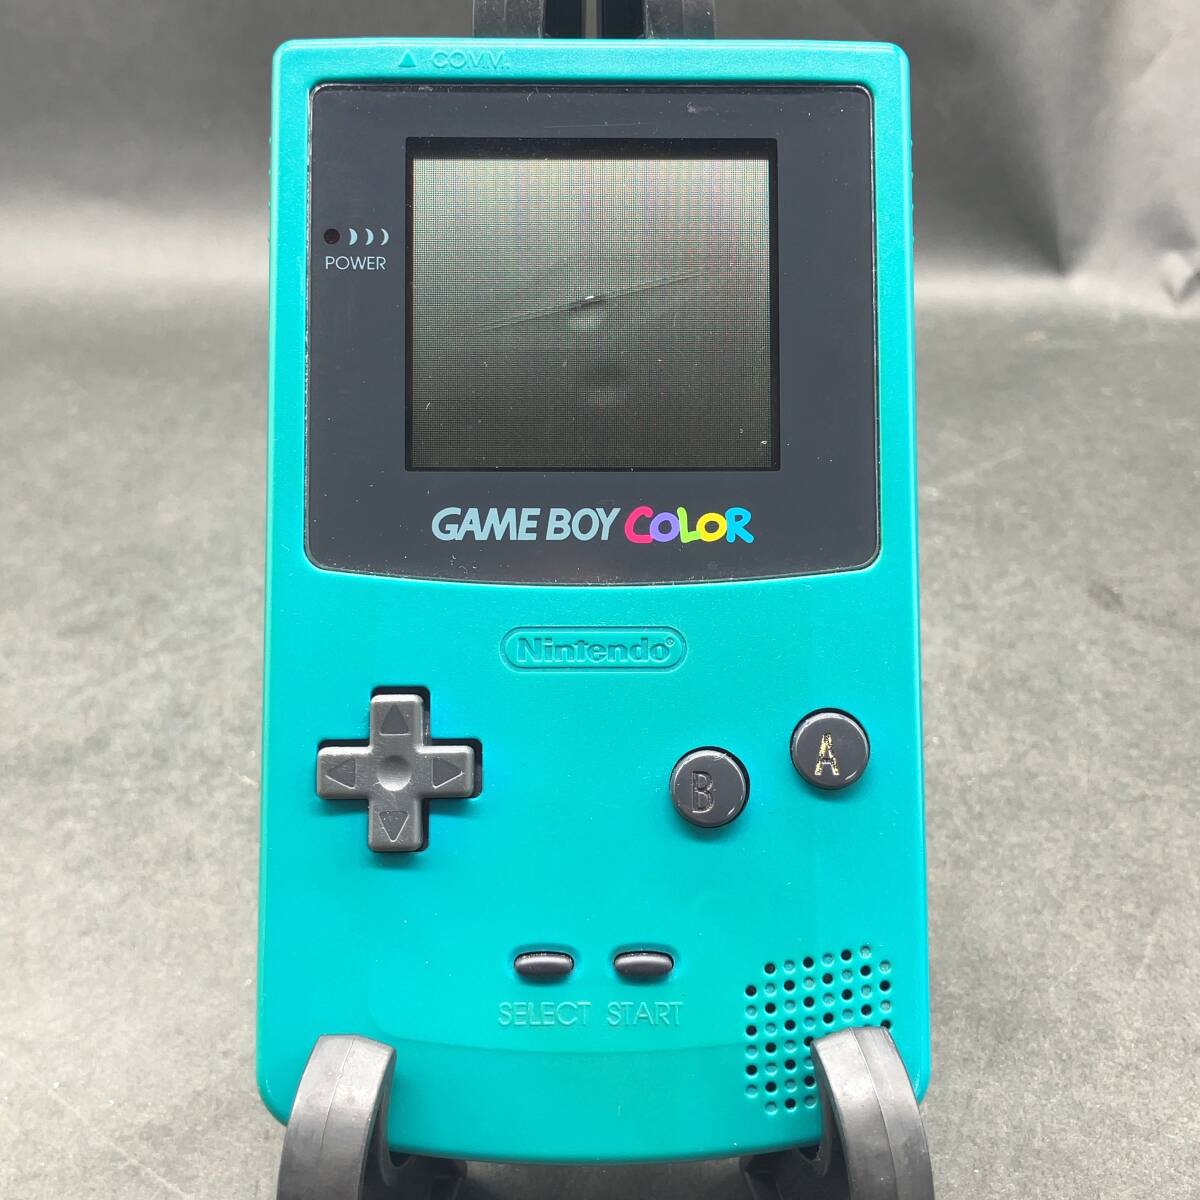 p-74827 美品 Nintendo ゲームボーイカラー ブルー GBC 動作品 本体のみ GAME BOY COLOR BLUE 任天堂 レトロゲーム機の画像1